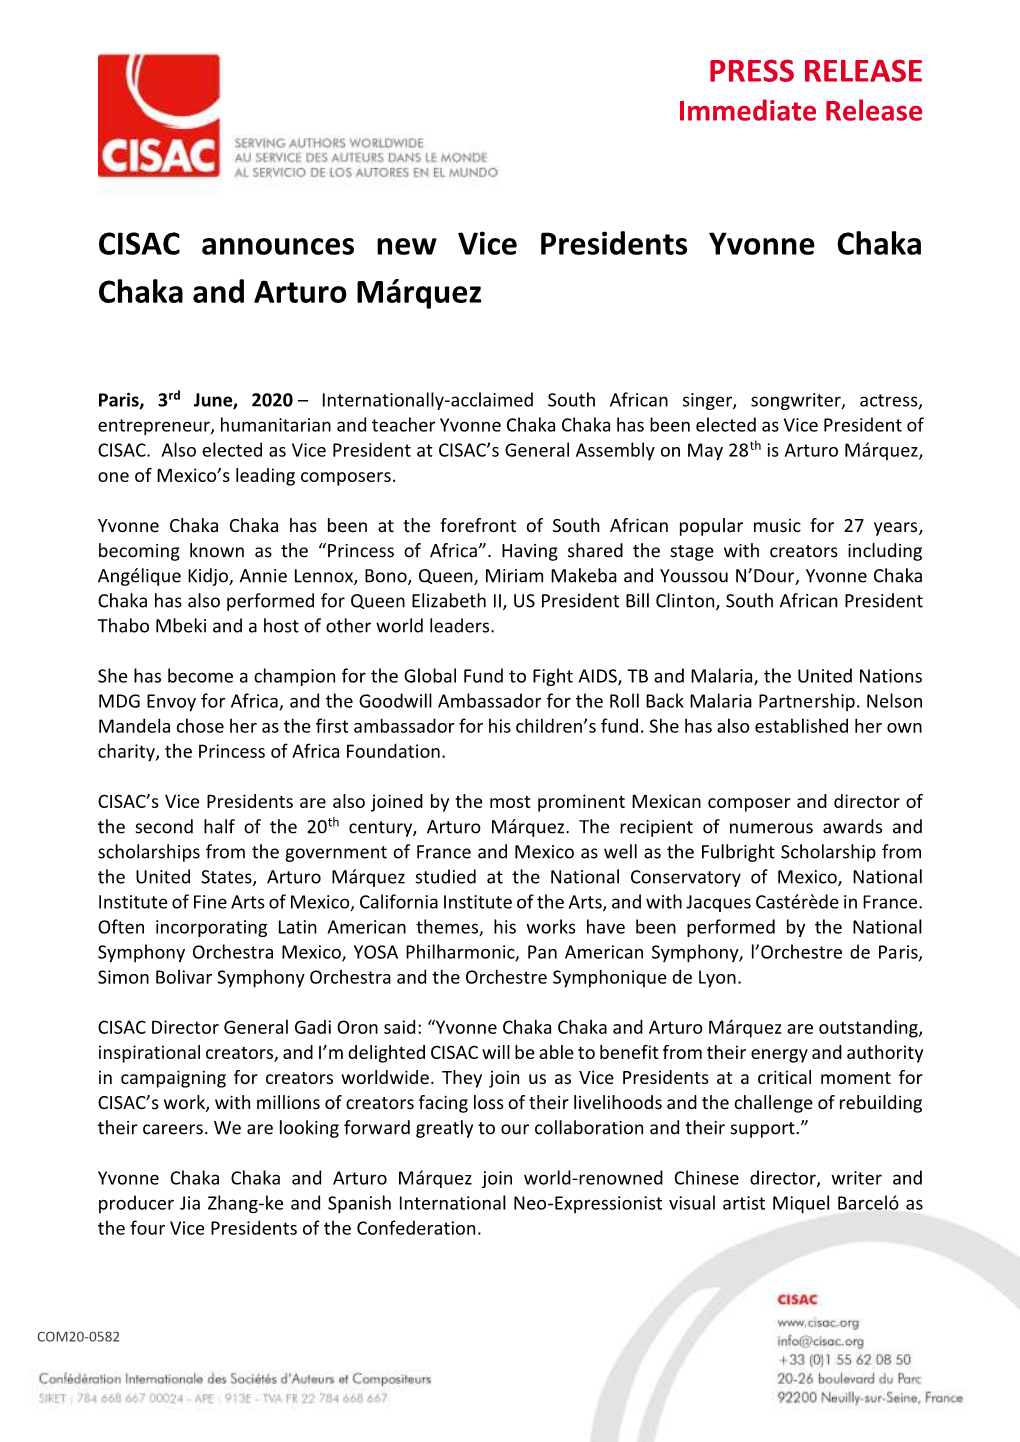 PRESS RELEASE CISAC Announces New Vice Presidents Yvonne Chaka